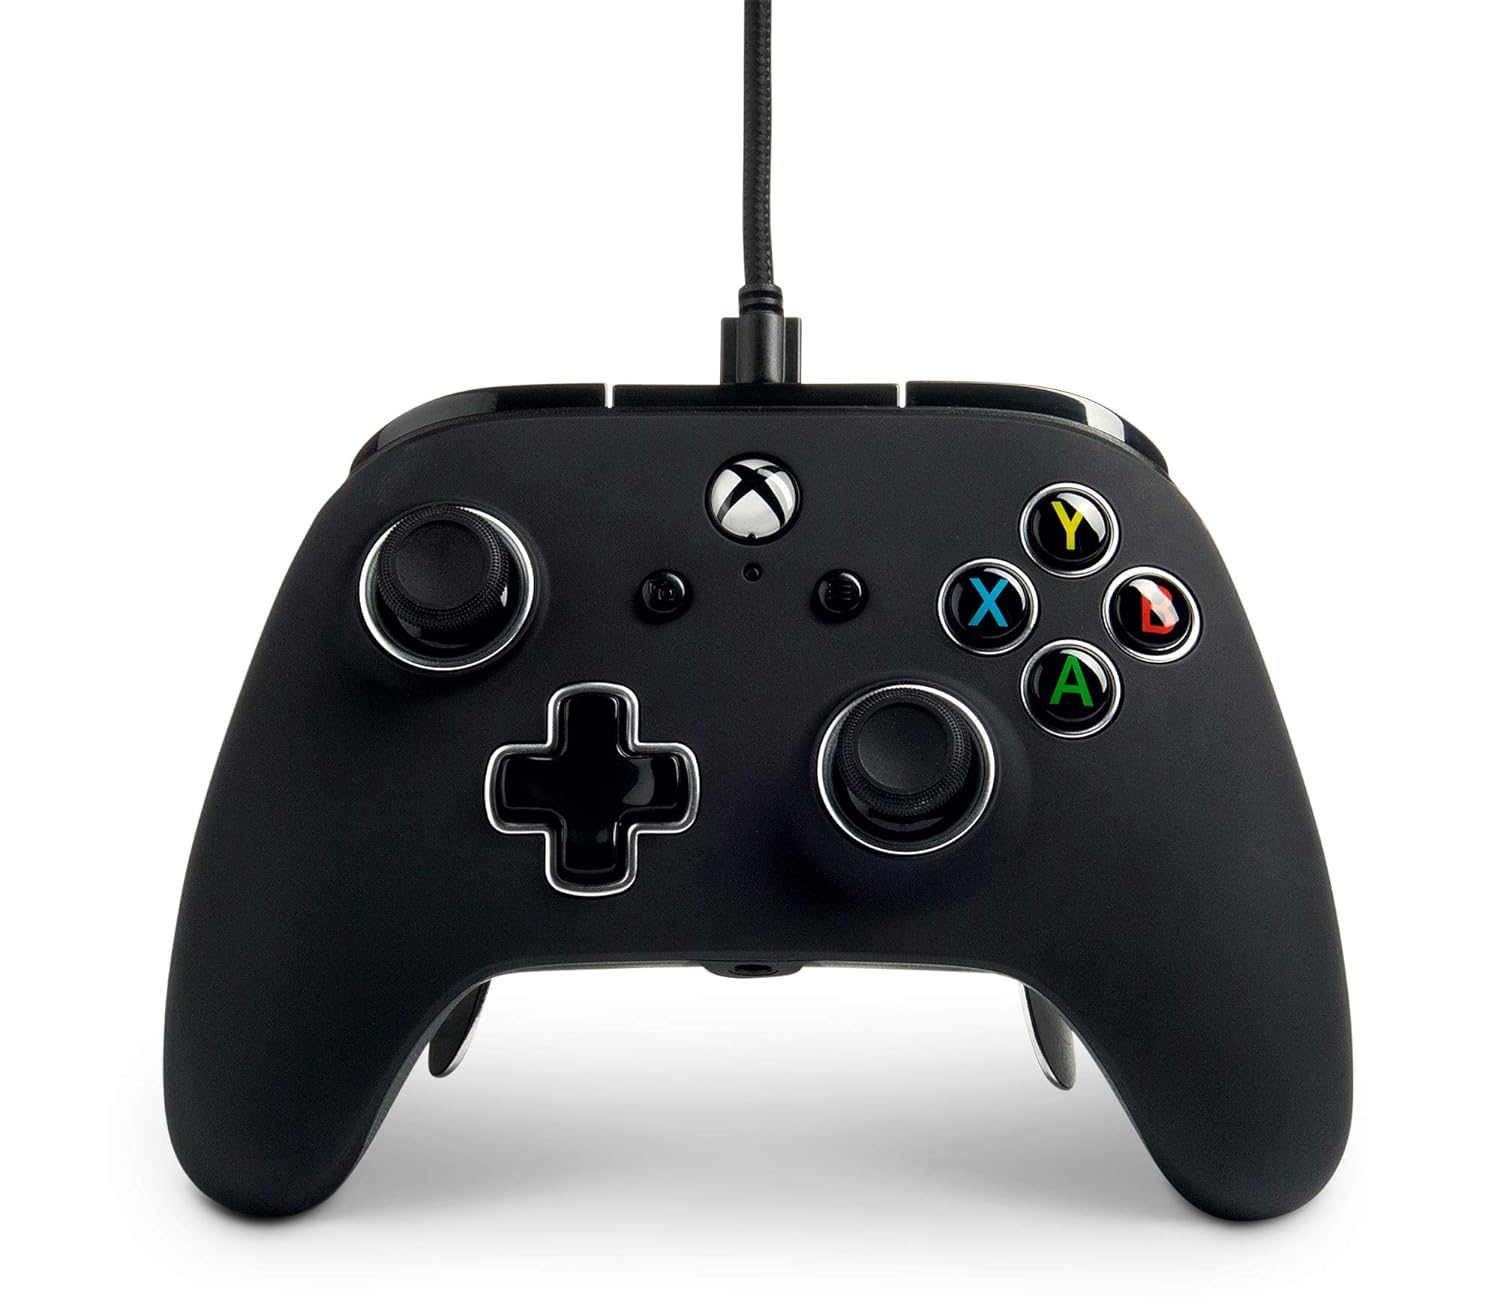 Xbox controller and power button